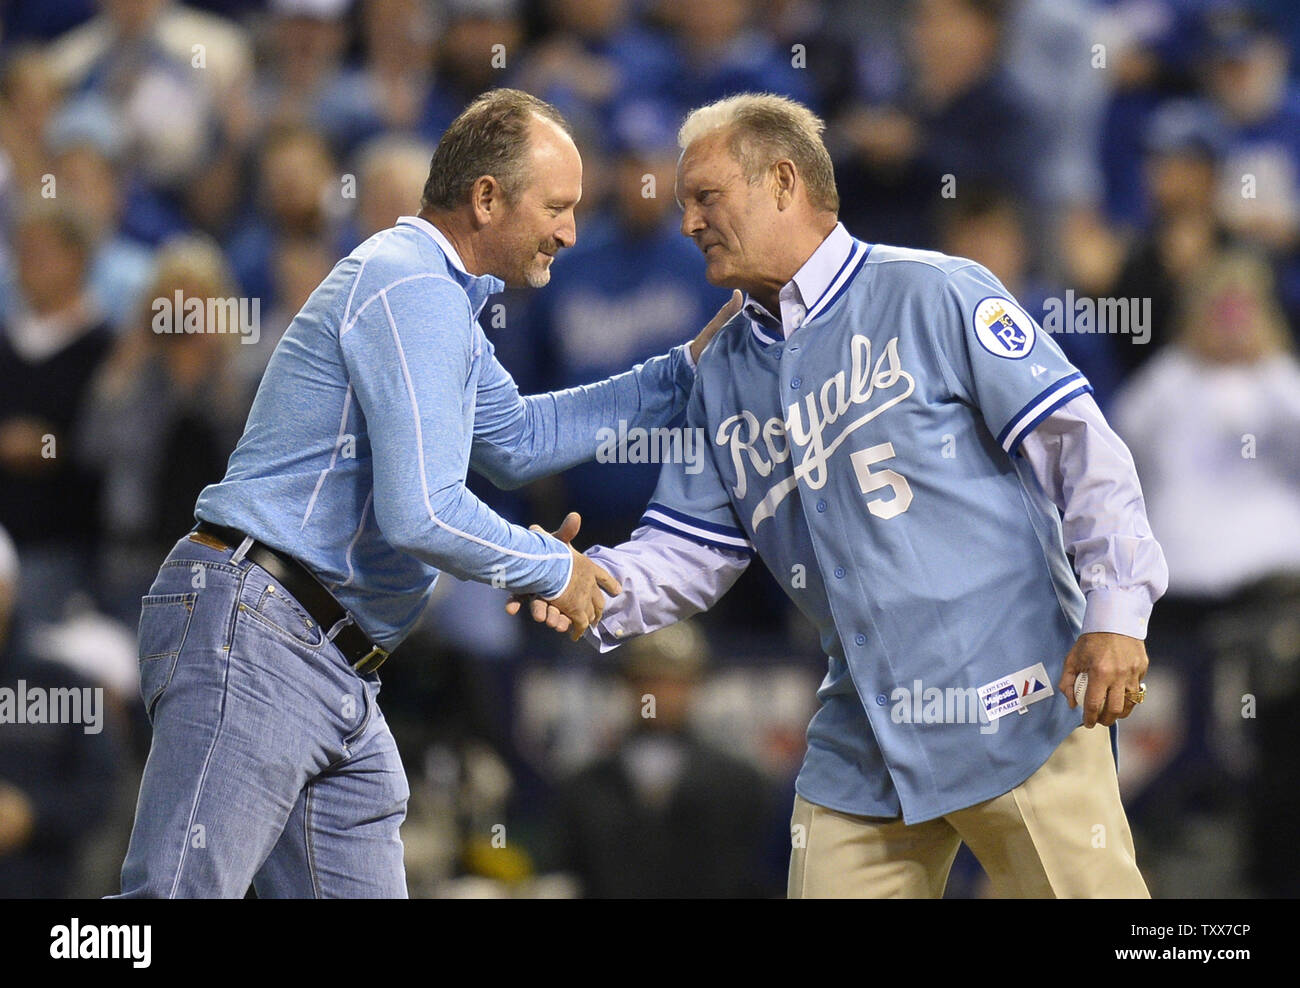 Royals' greats Bret Saberhagen and George Brett shake hands before